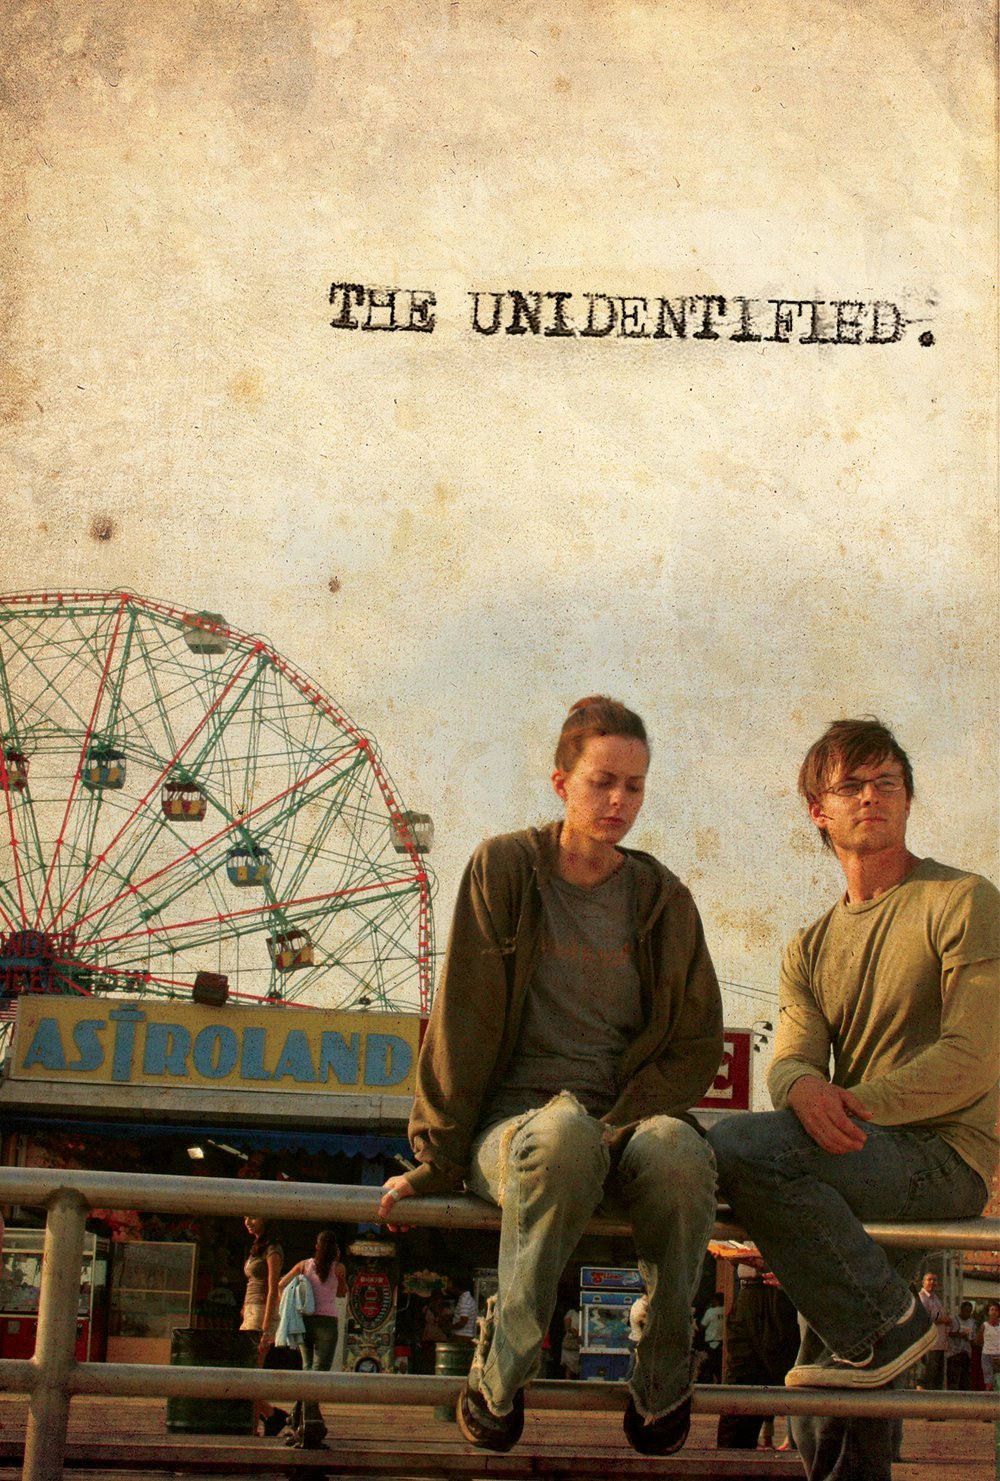 The Unidentified (2008) Screenshot 1